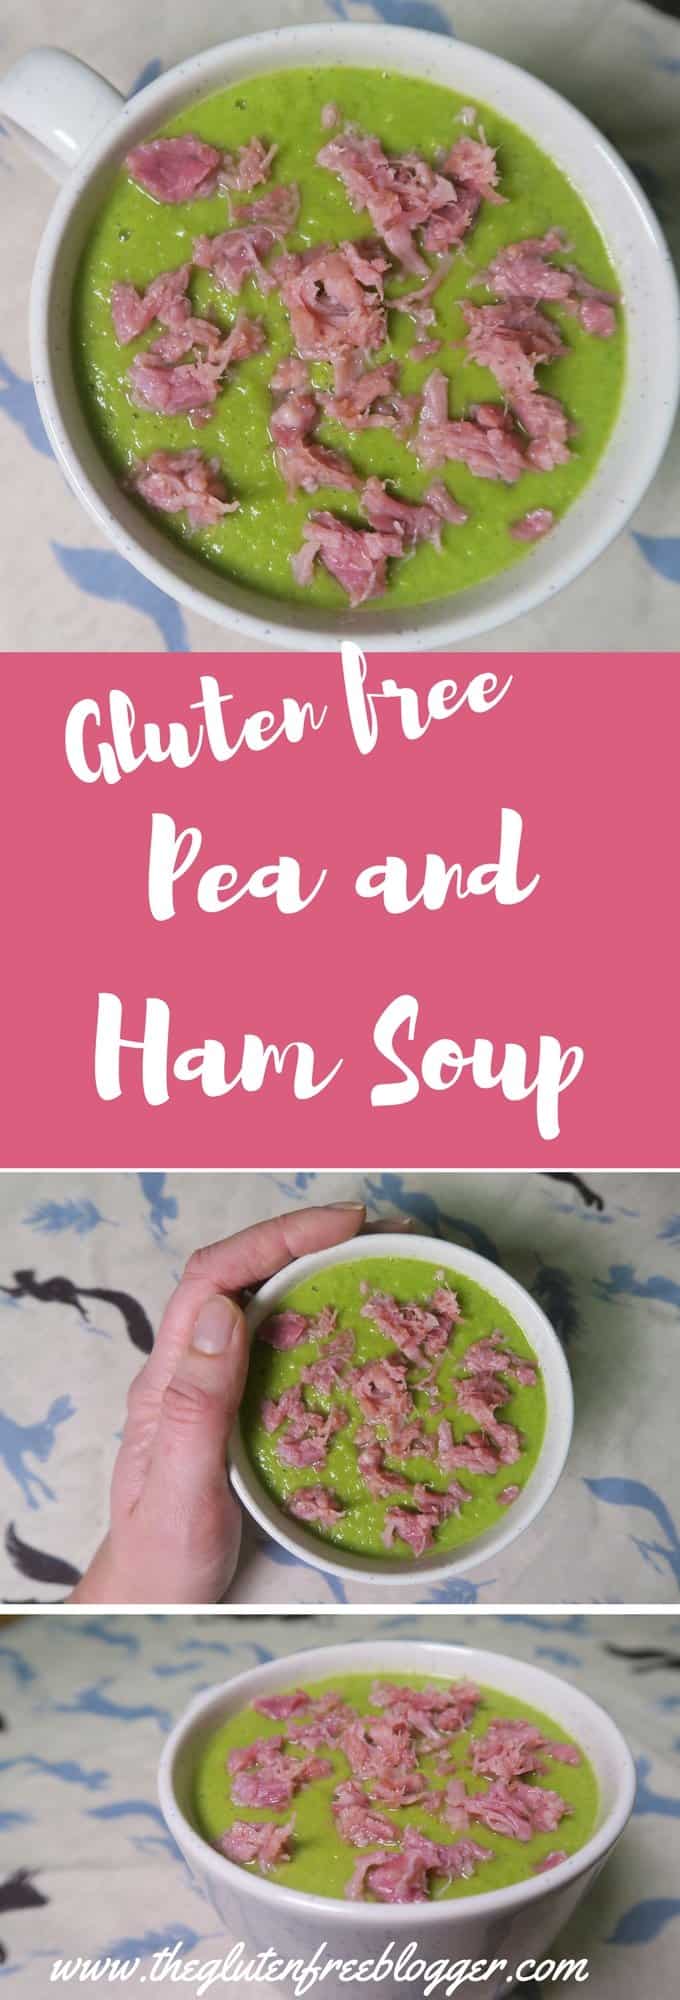 Gluten free pea and ham soup recipe - dairy free - www.theglutenfreeblogger.com